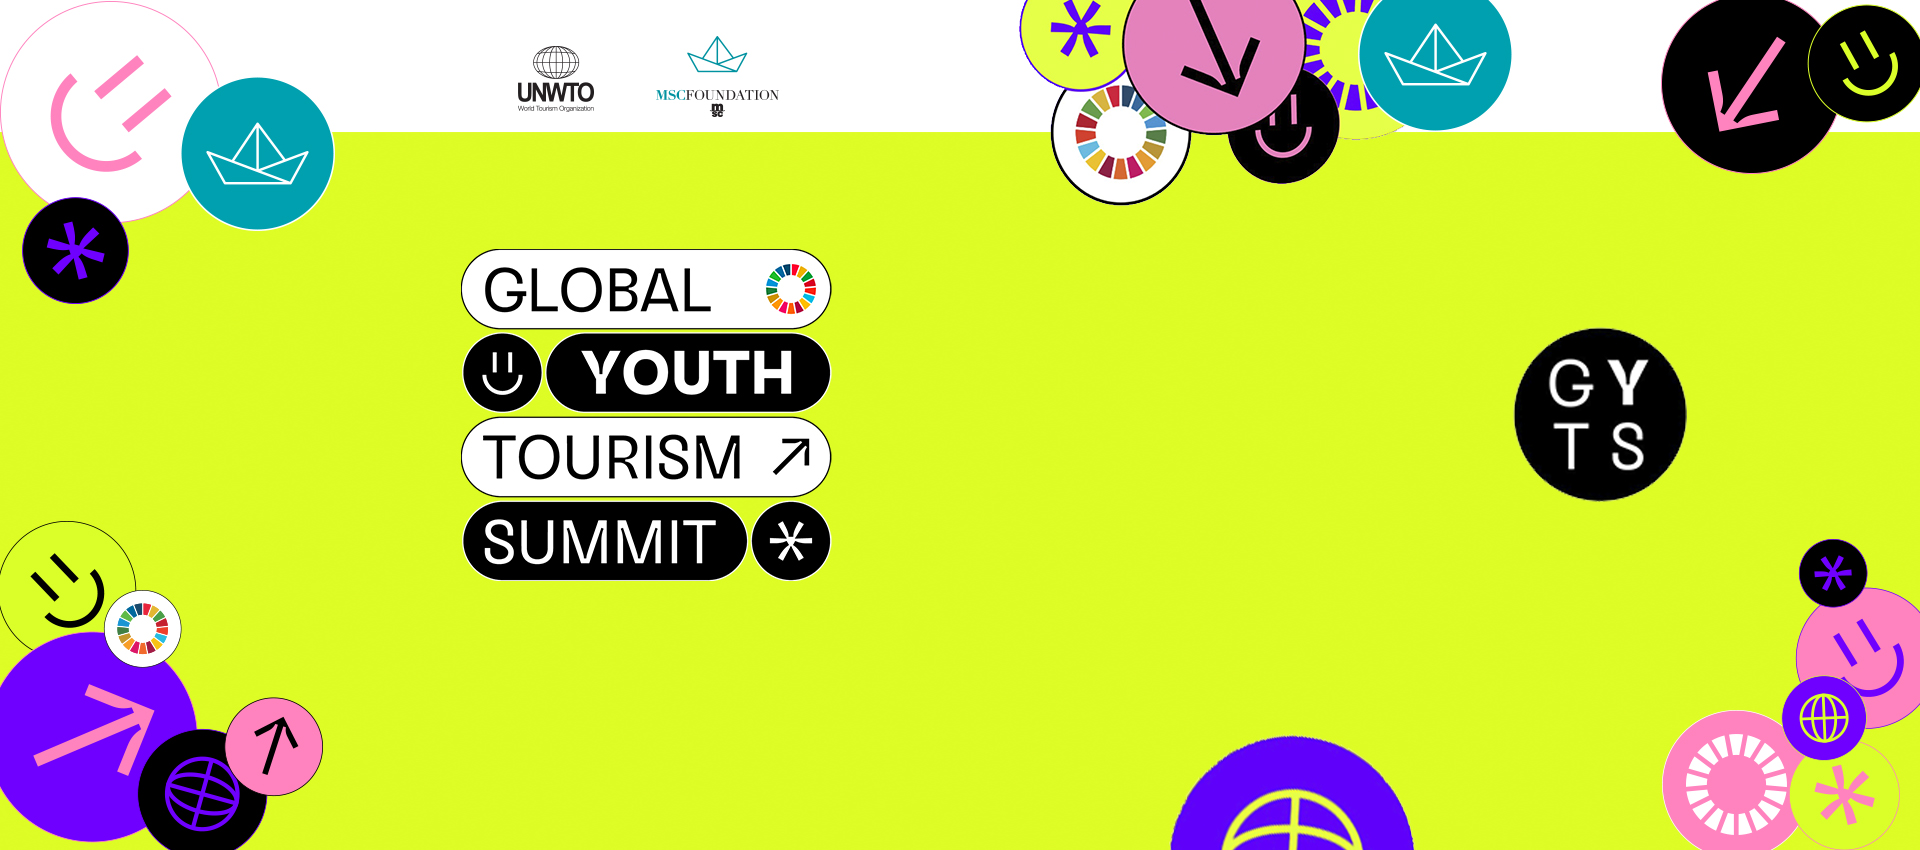 Global Youth Tourism Summit | MSC Foundation